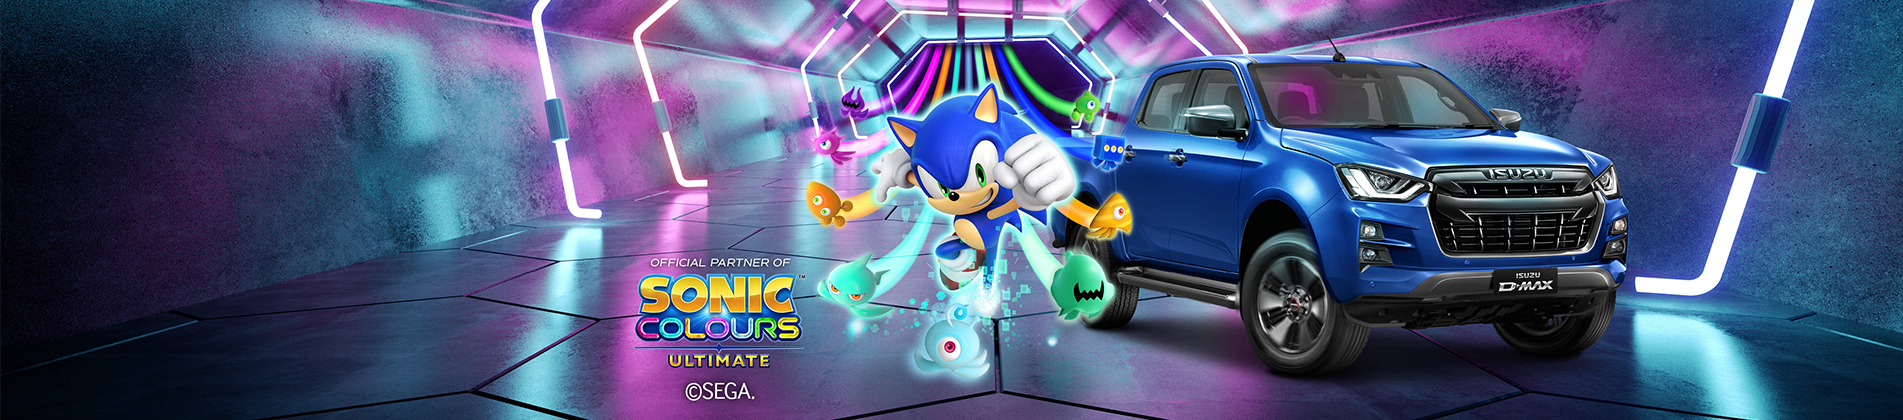 Isuzu Sonic Colours Ultimate